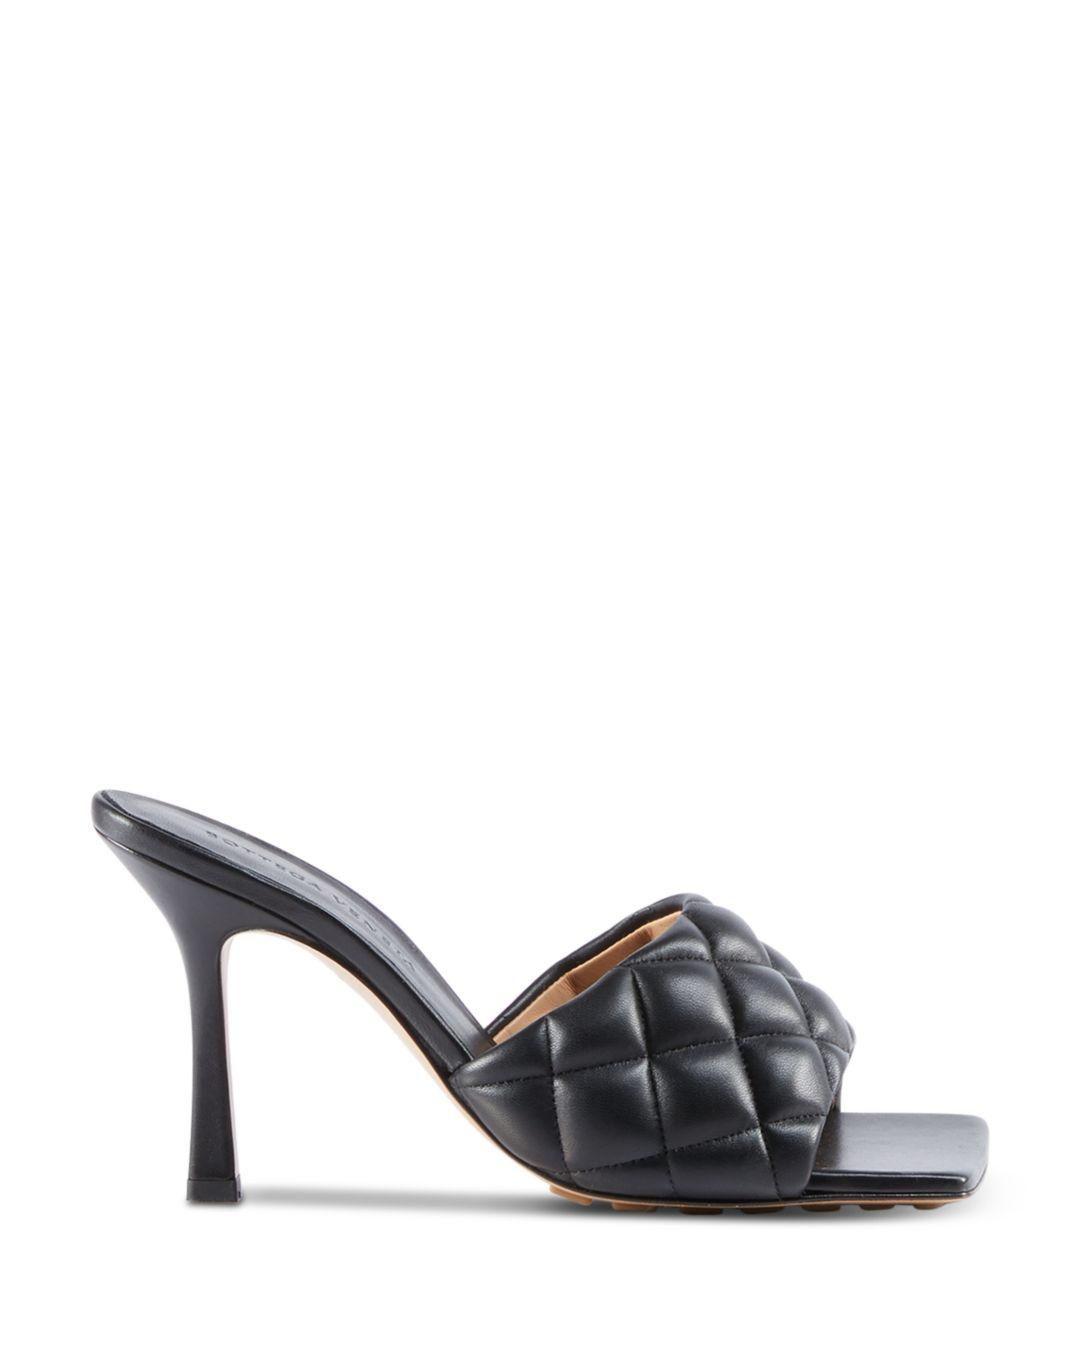 Bottega Veneta Women's Quilted Leather High - Heel Sandals in Nero ...